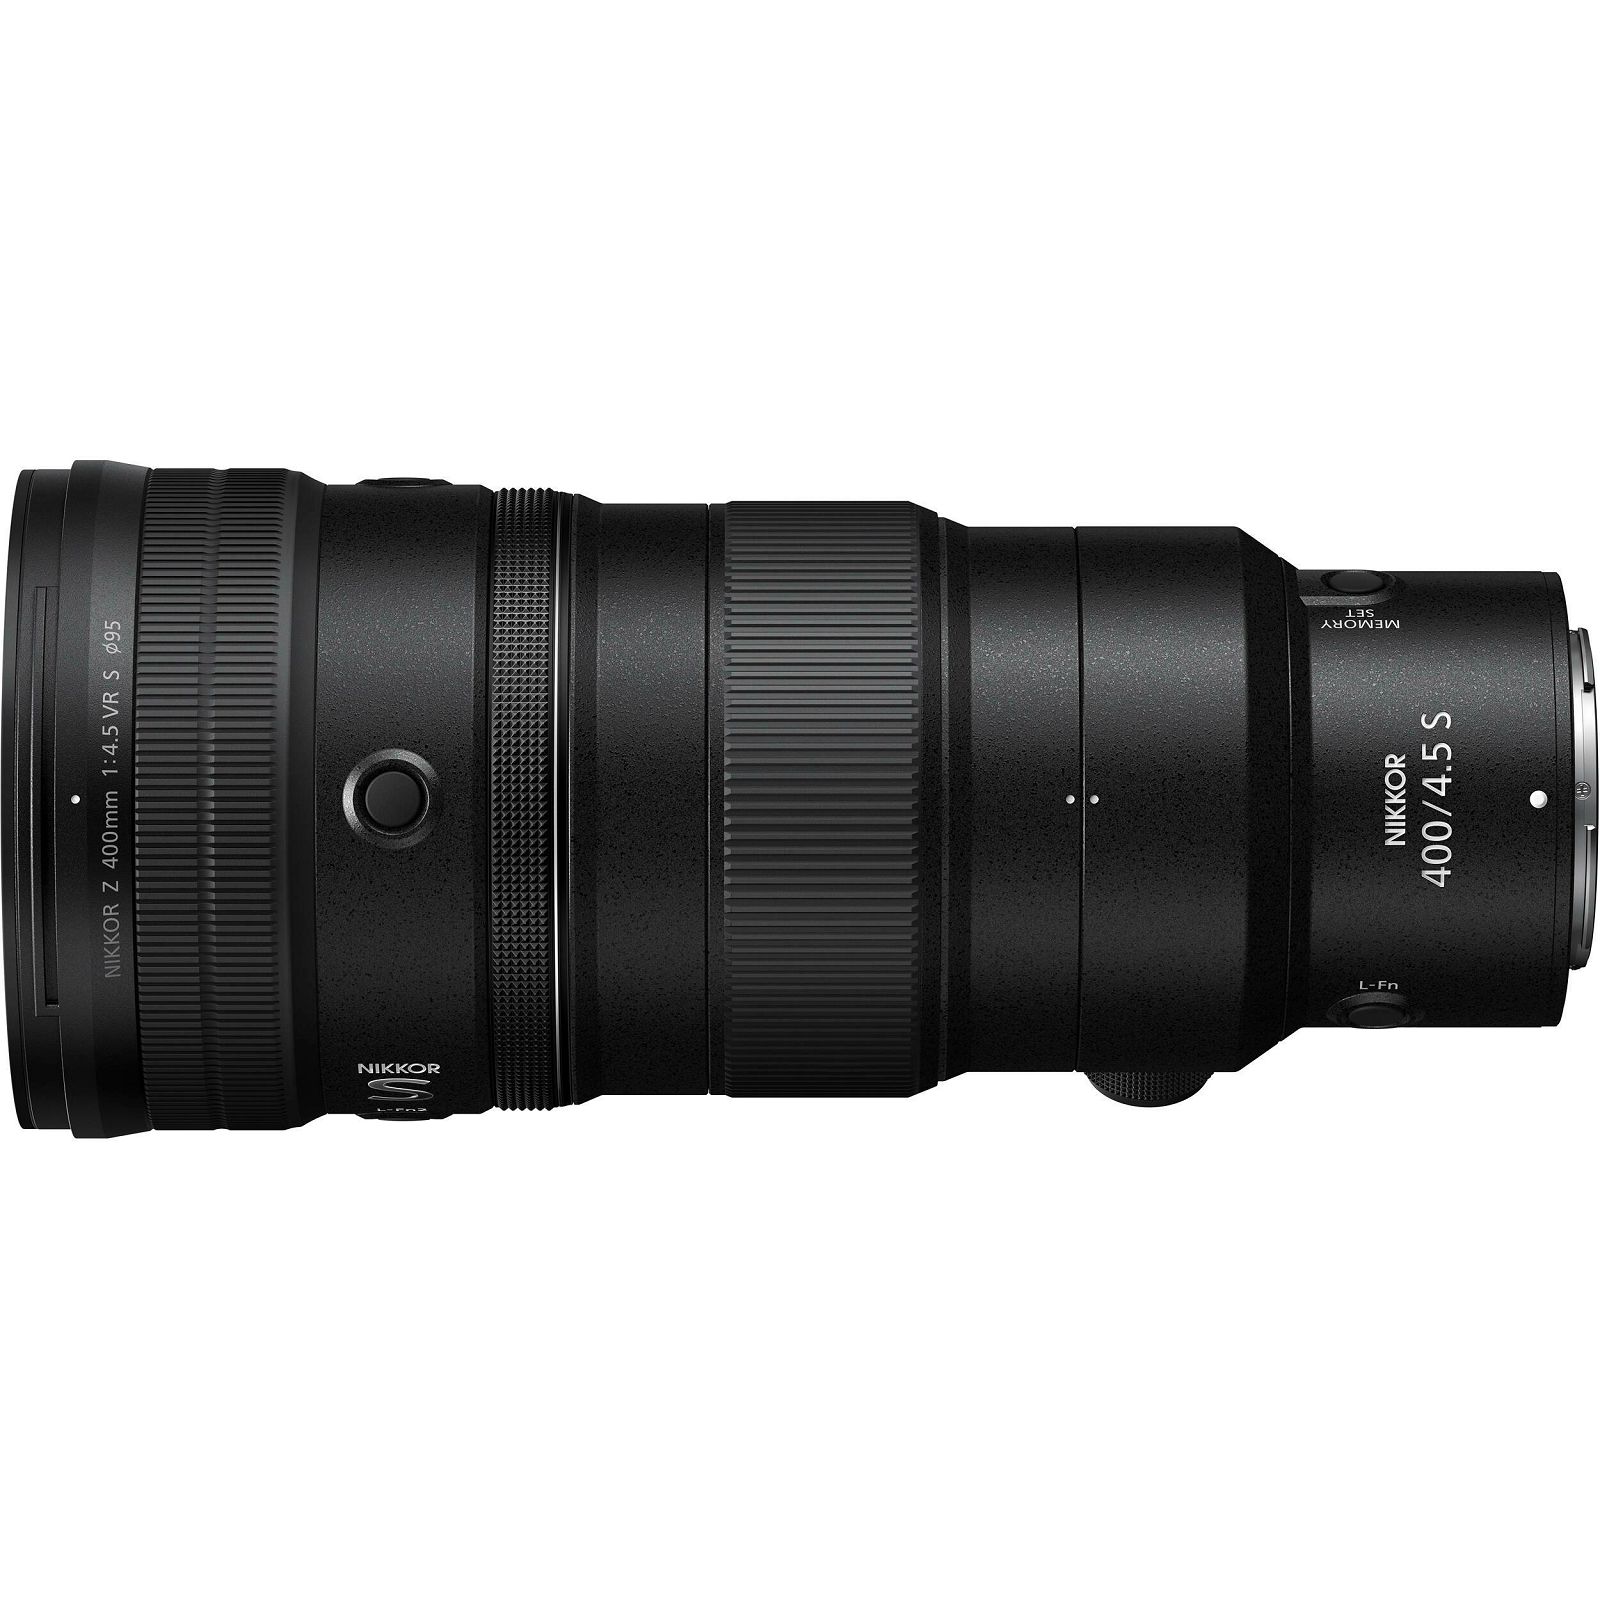 Nikon Z 400mm f/4.5 VR S telefoto objektiv (JMA503DA)